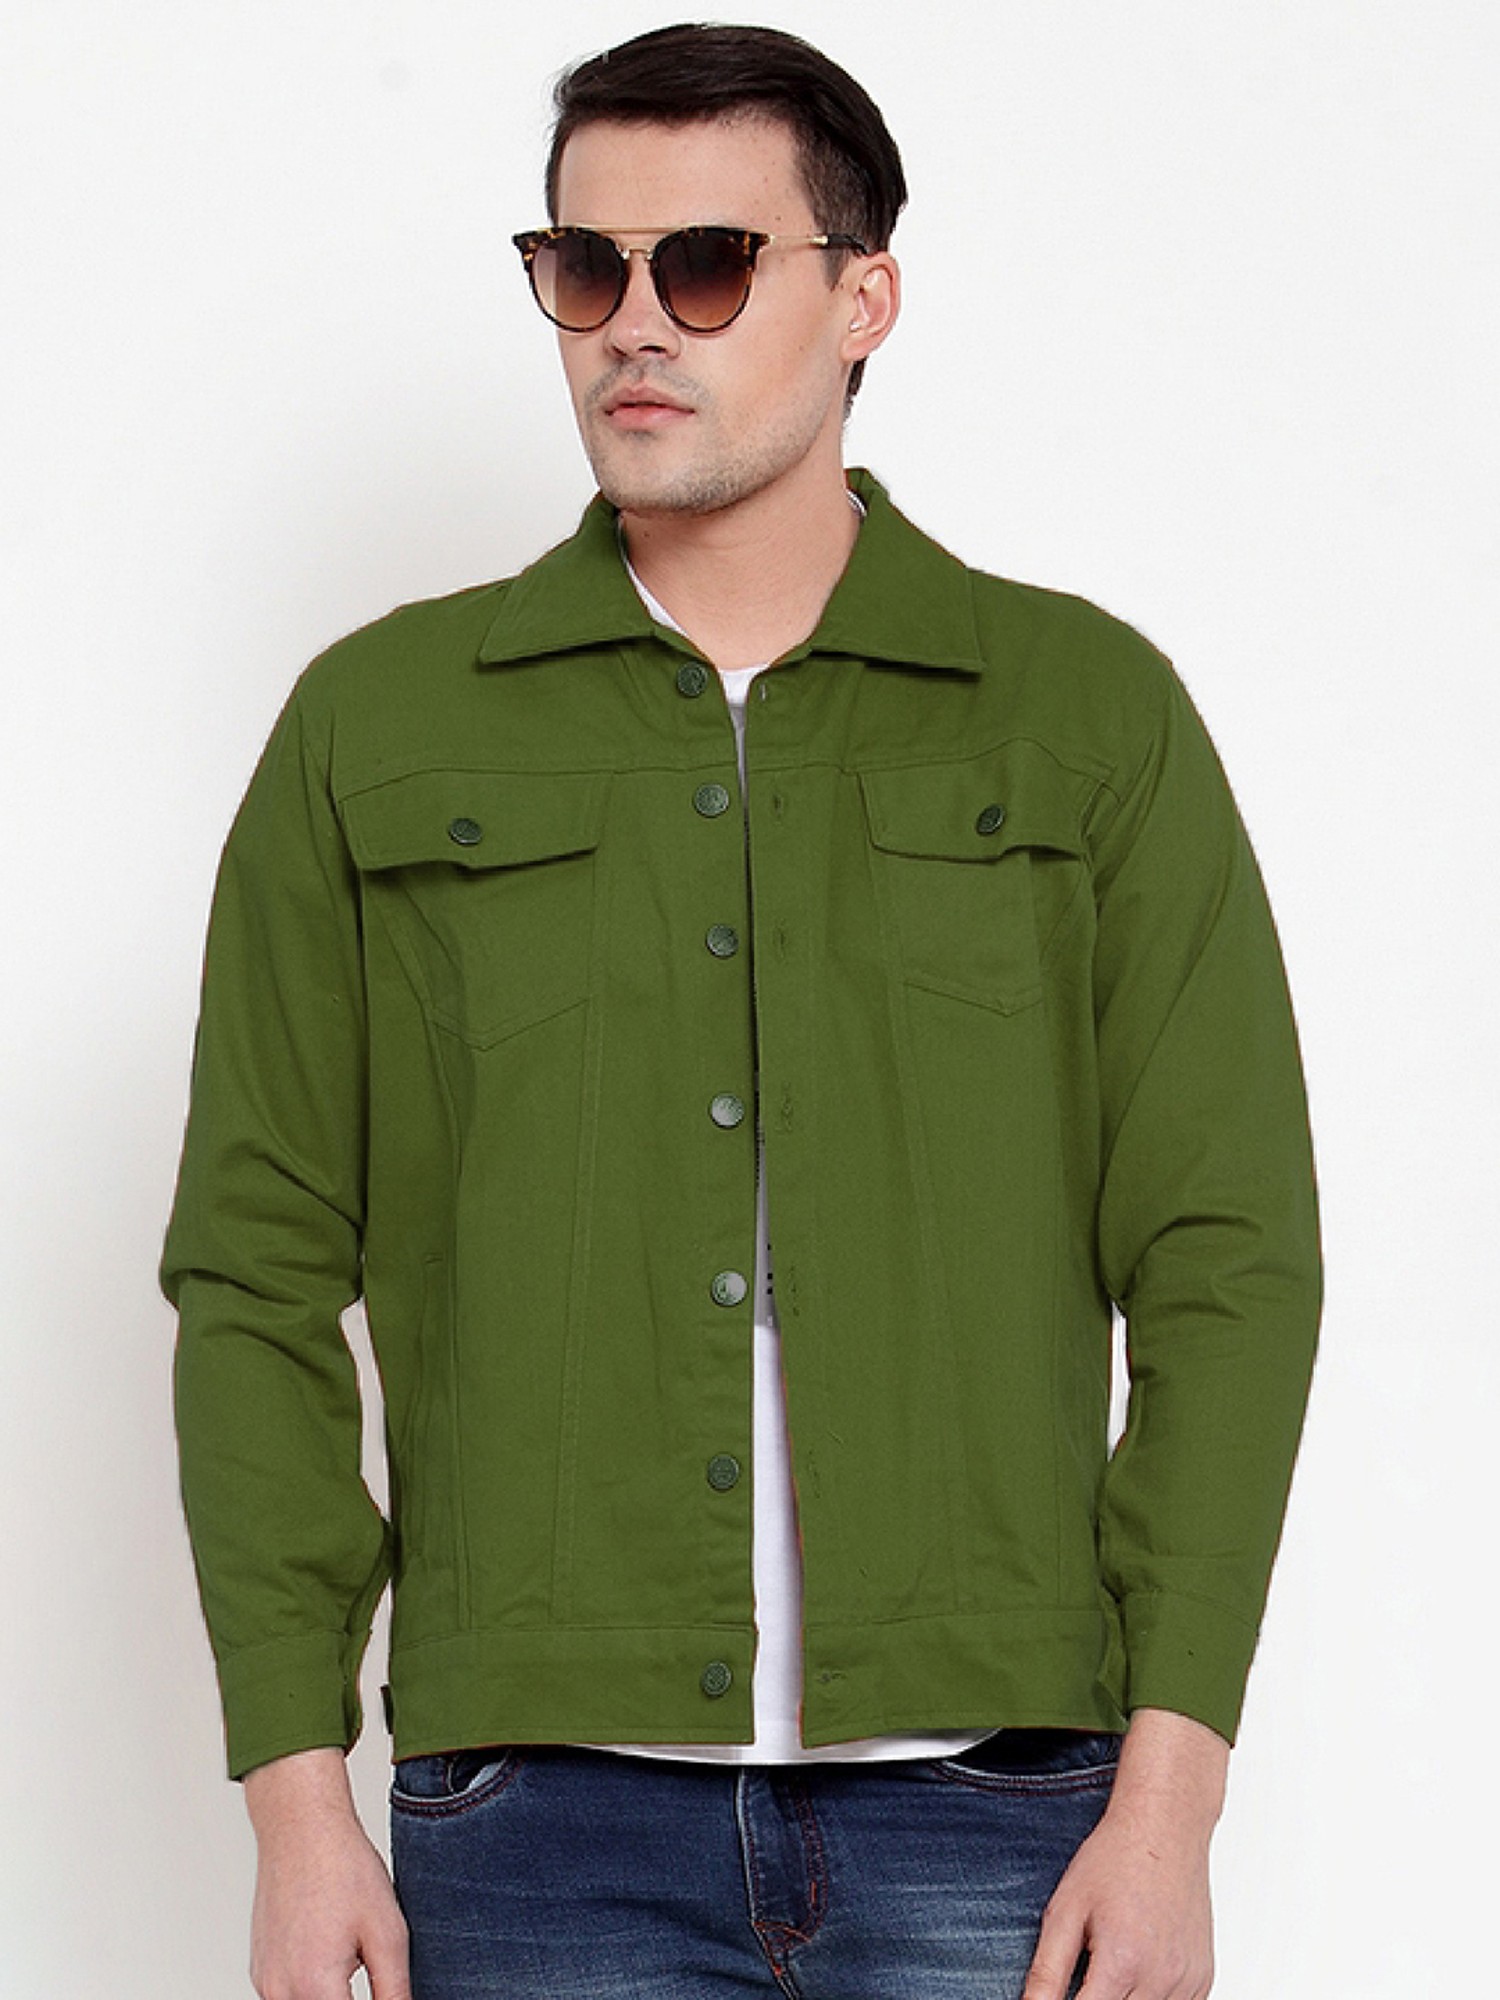 Buy FOREVER 21 Olive Green Denim Jacket - Jackets for Women 1103268 | Myntra